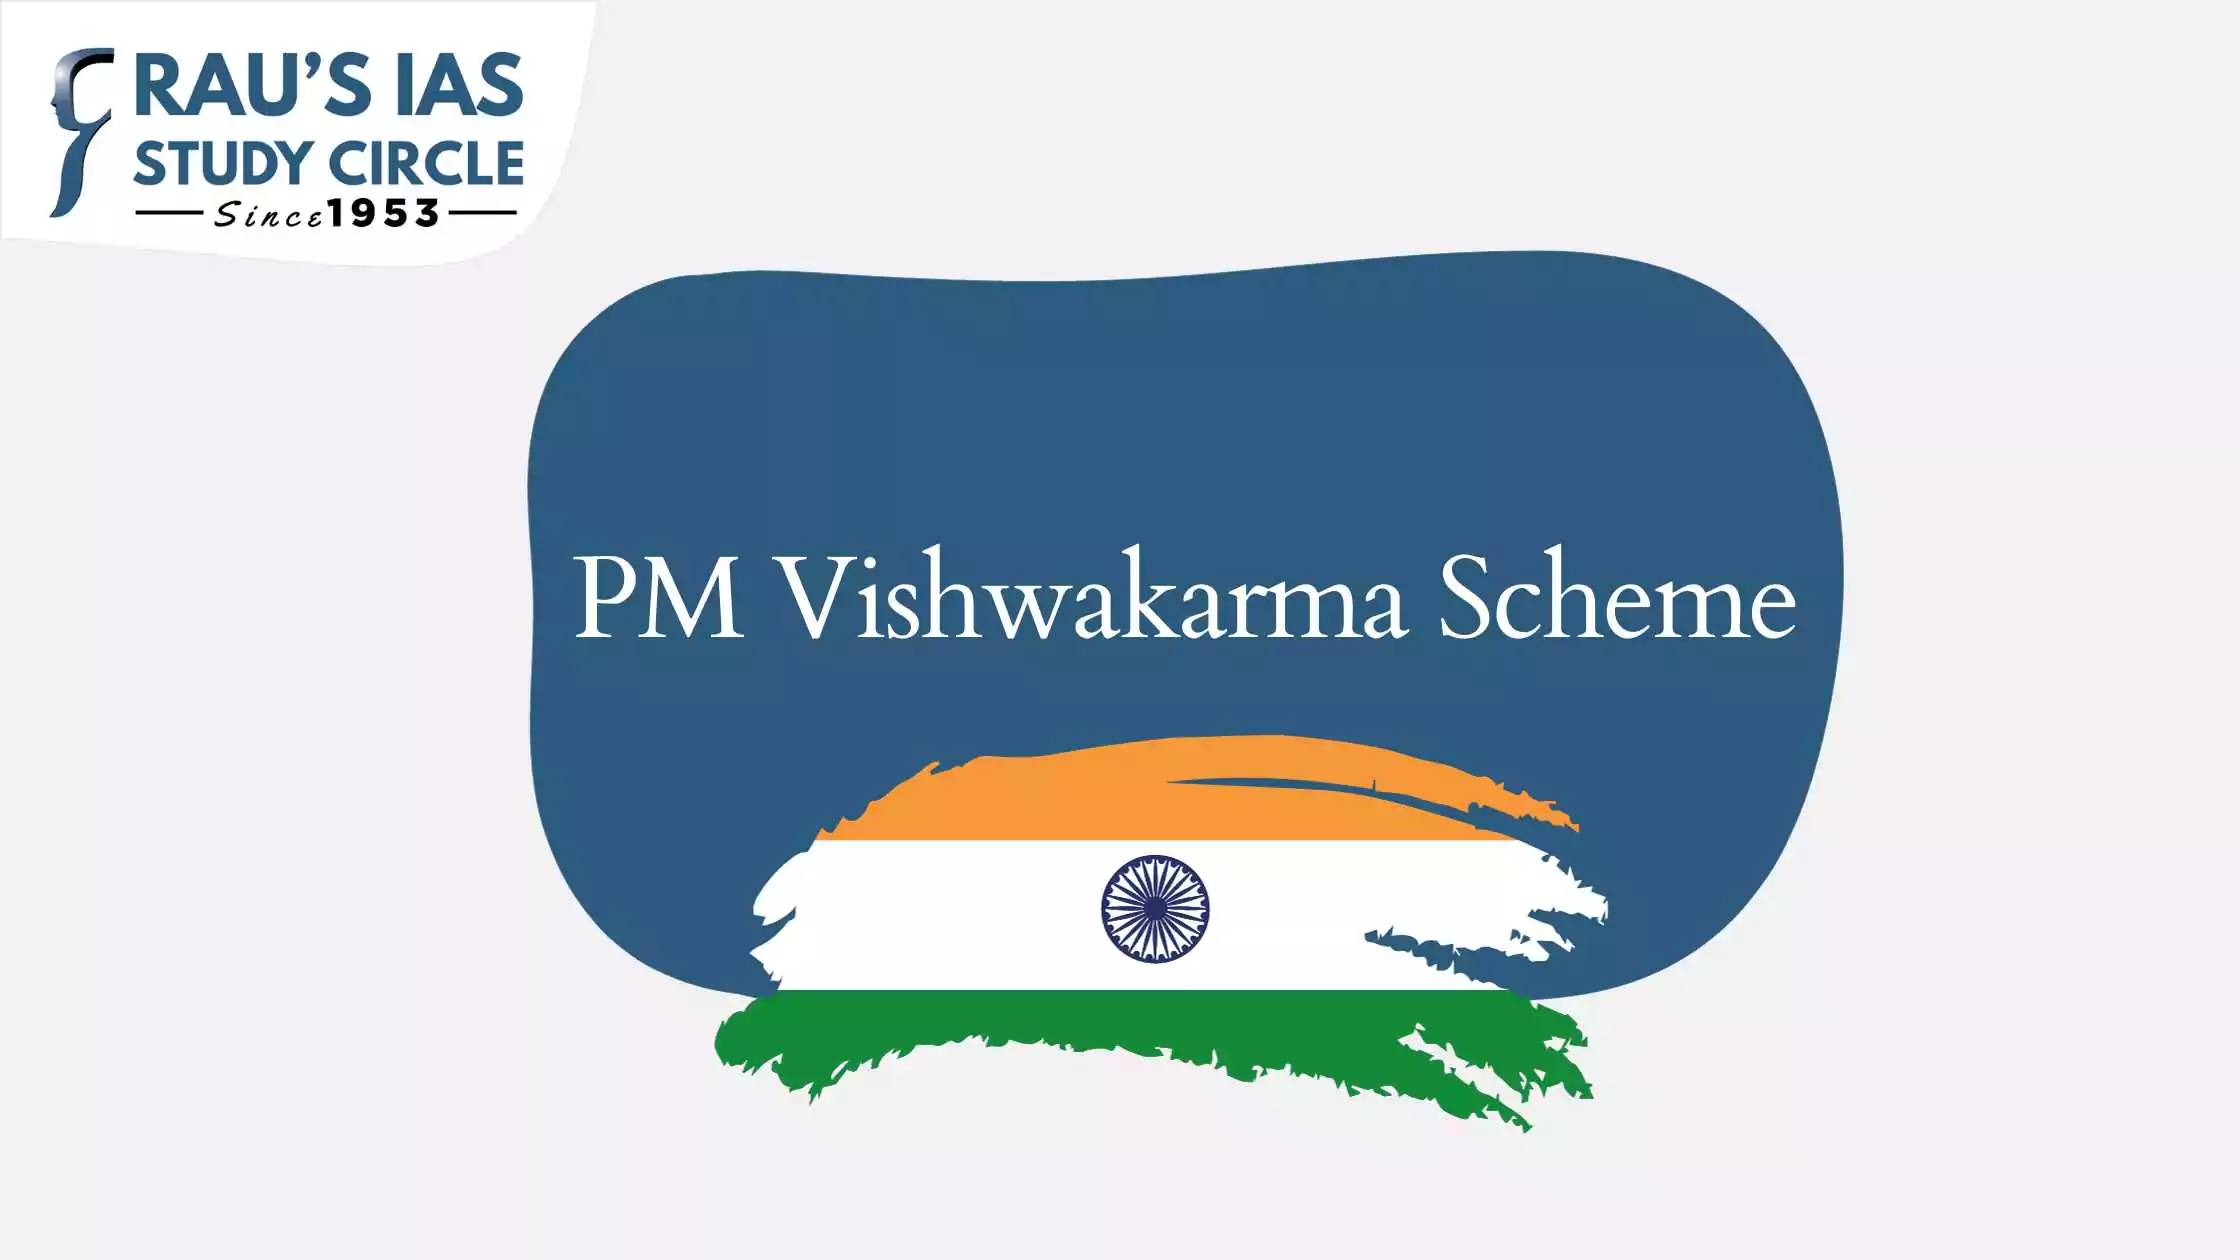 More about PM Vishwakarma Scheme